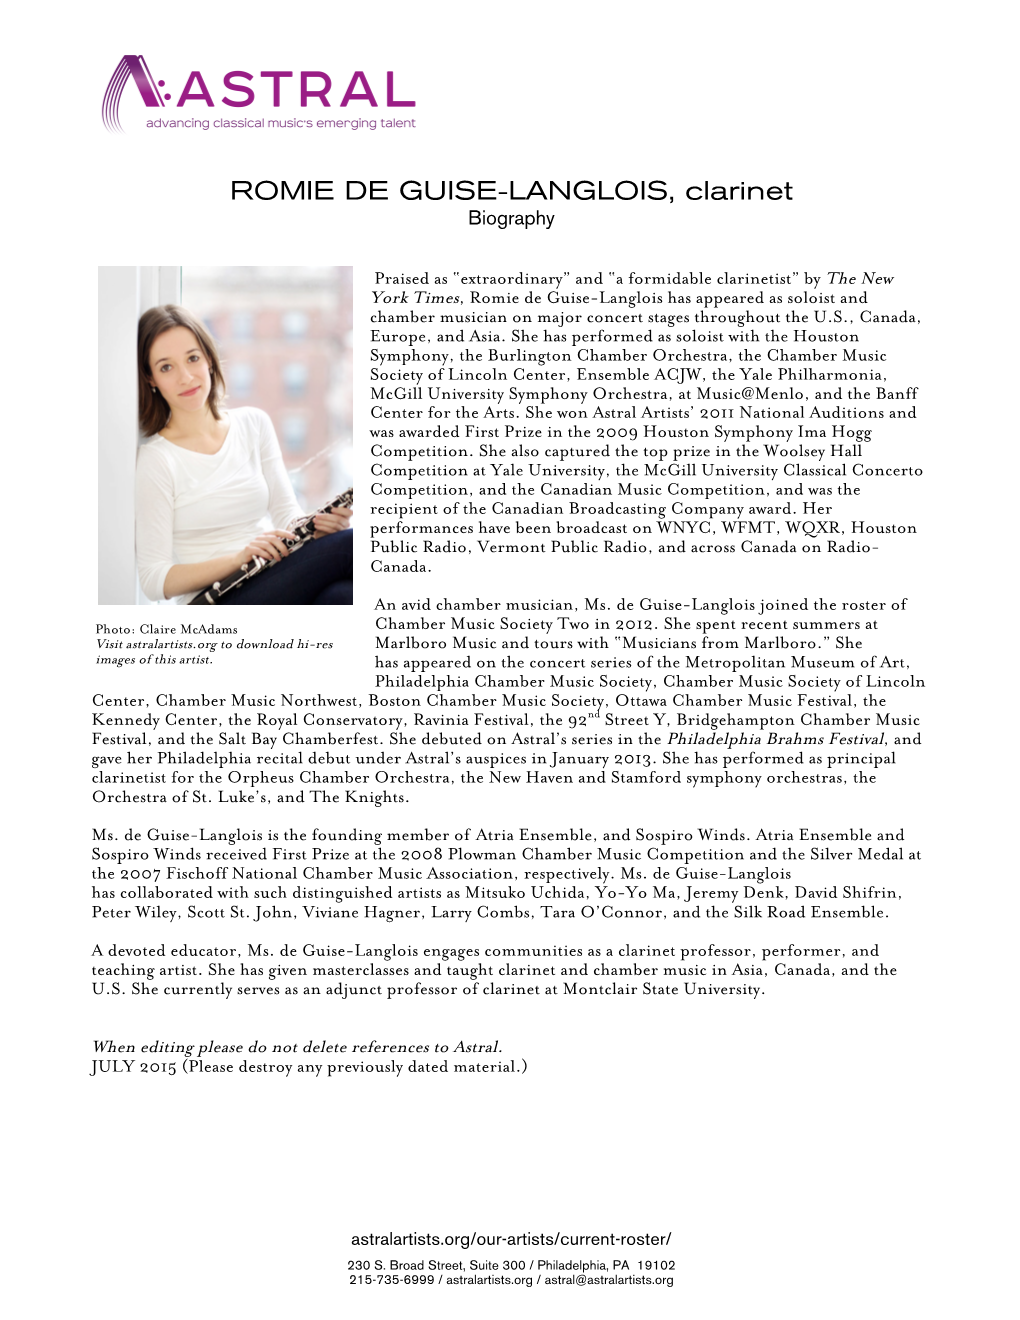 ROMIE DE GUISE-LANGLOIS, Clarinet Biography